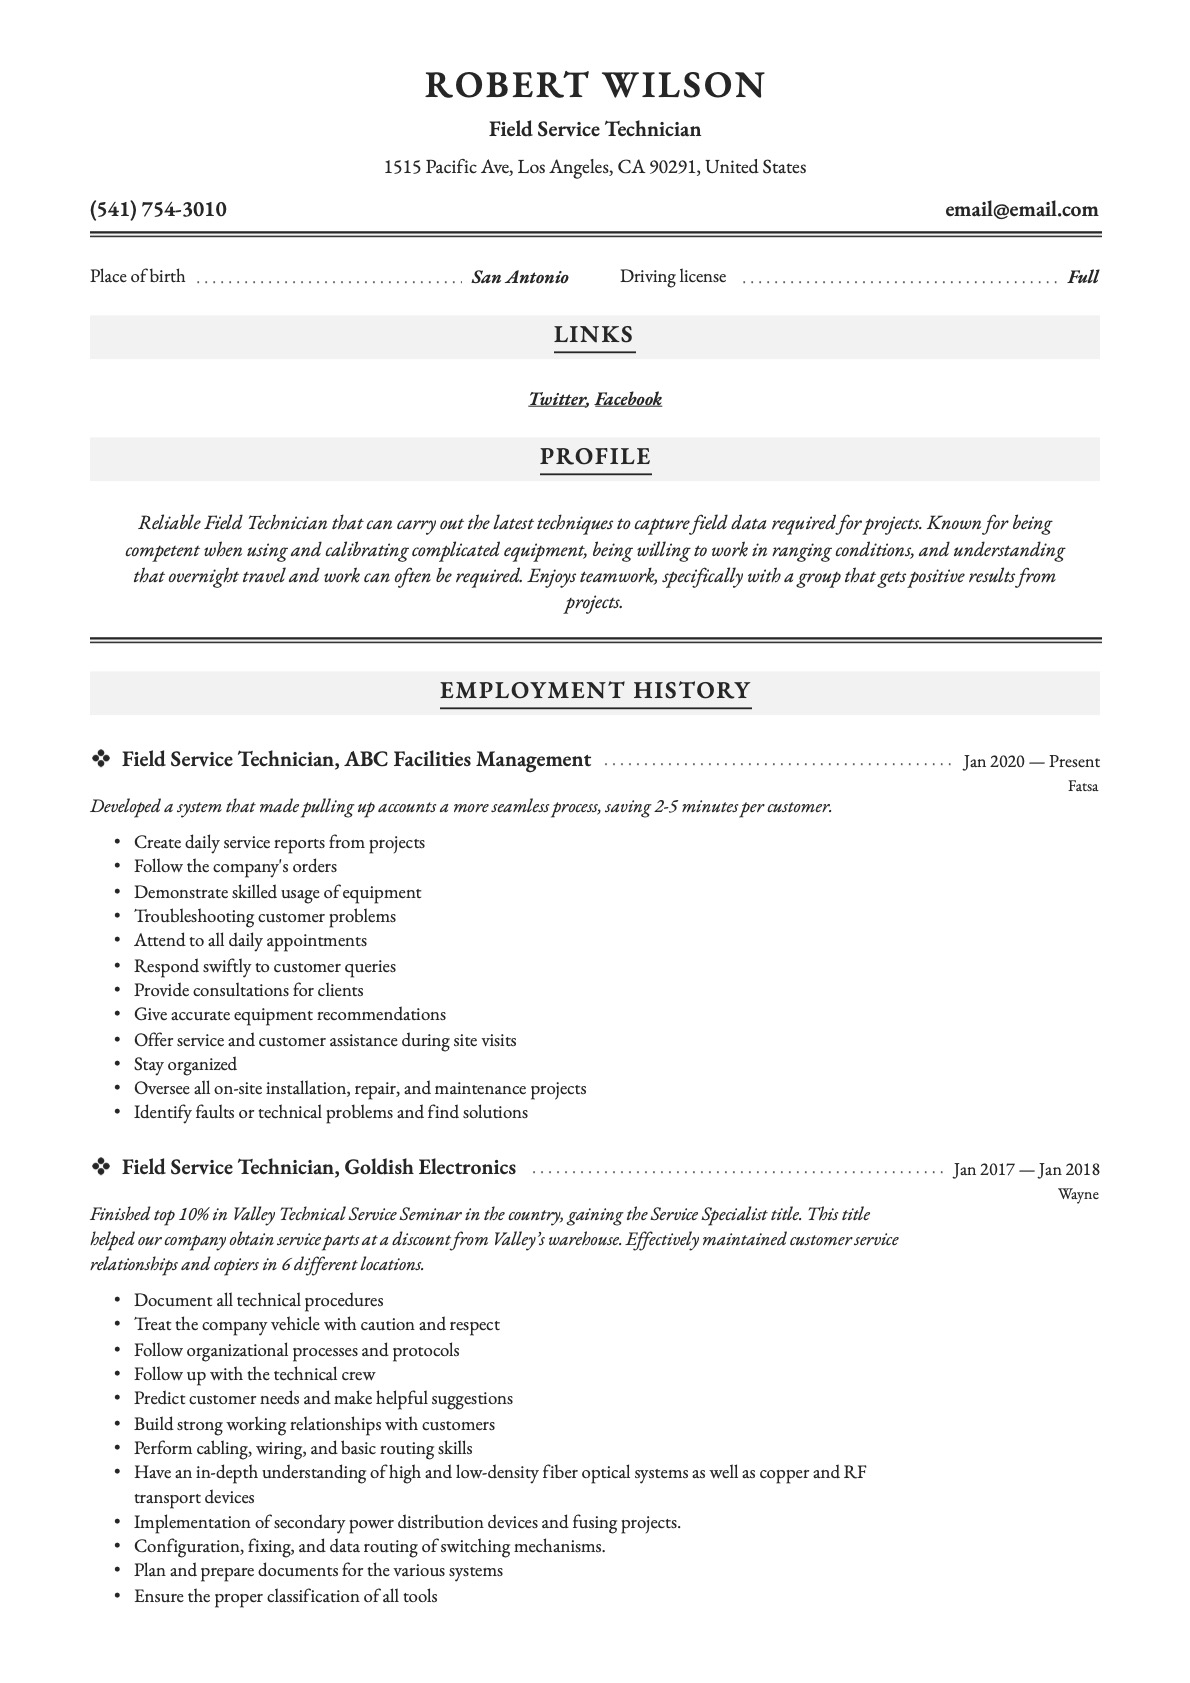 Example resume Field Service Technician-10